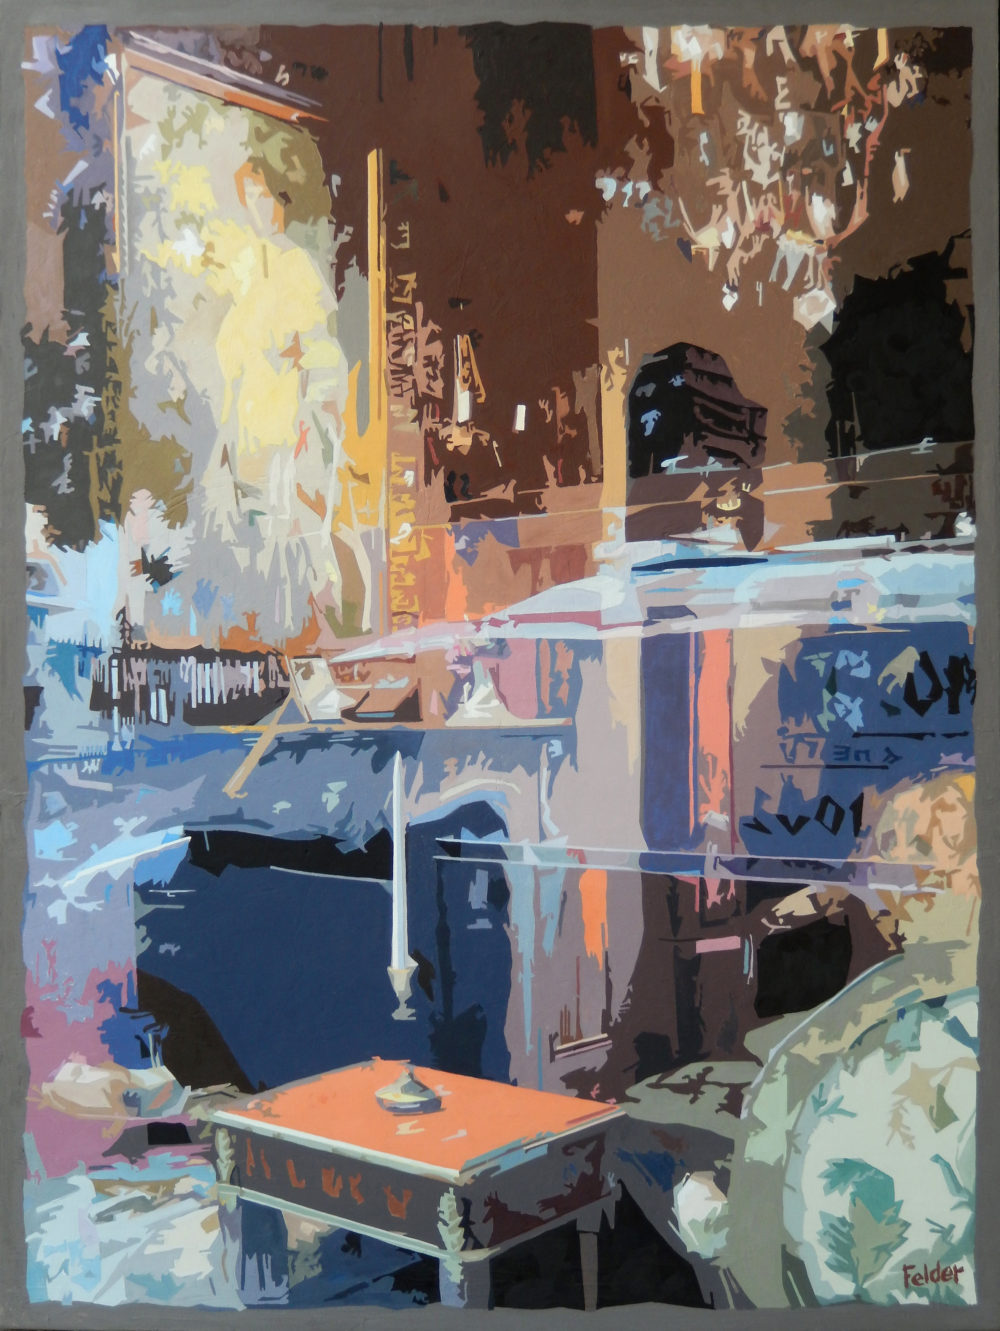 Reflections of a storefront window painting by Larry Felder | Felder Gallery